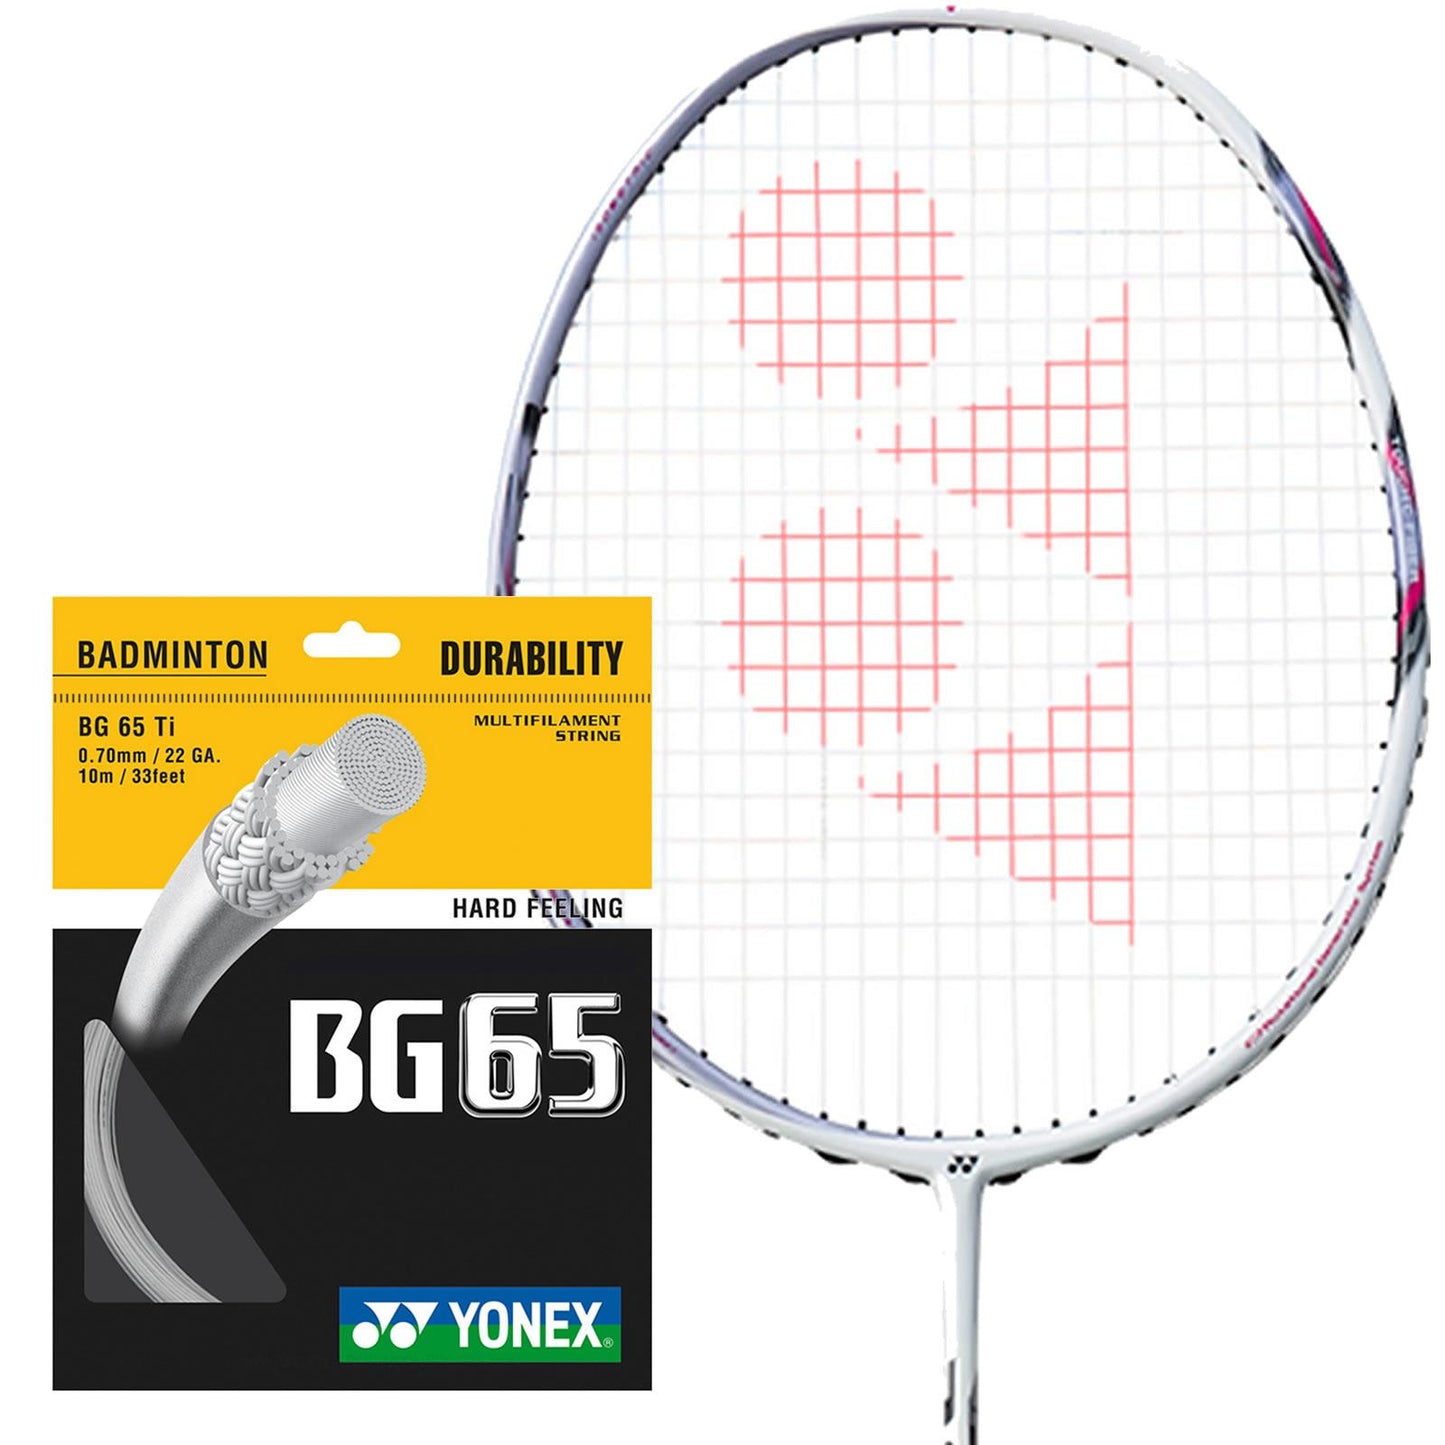 Yonex BG 65 Badminton String White - 0.7mm 10m Packet